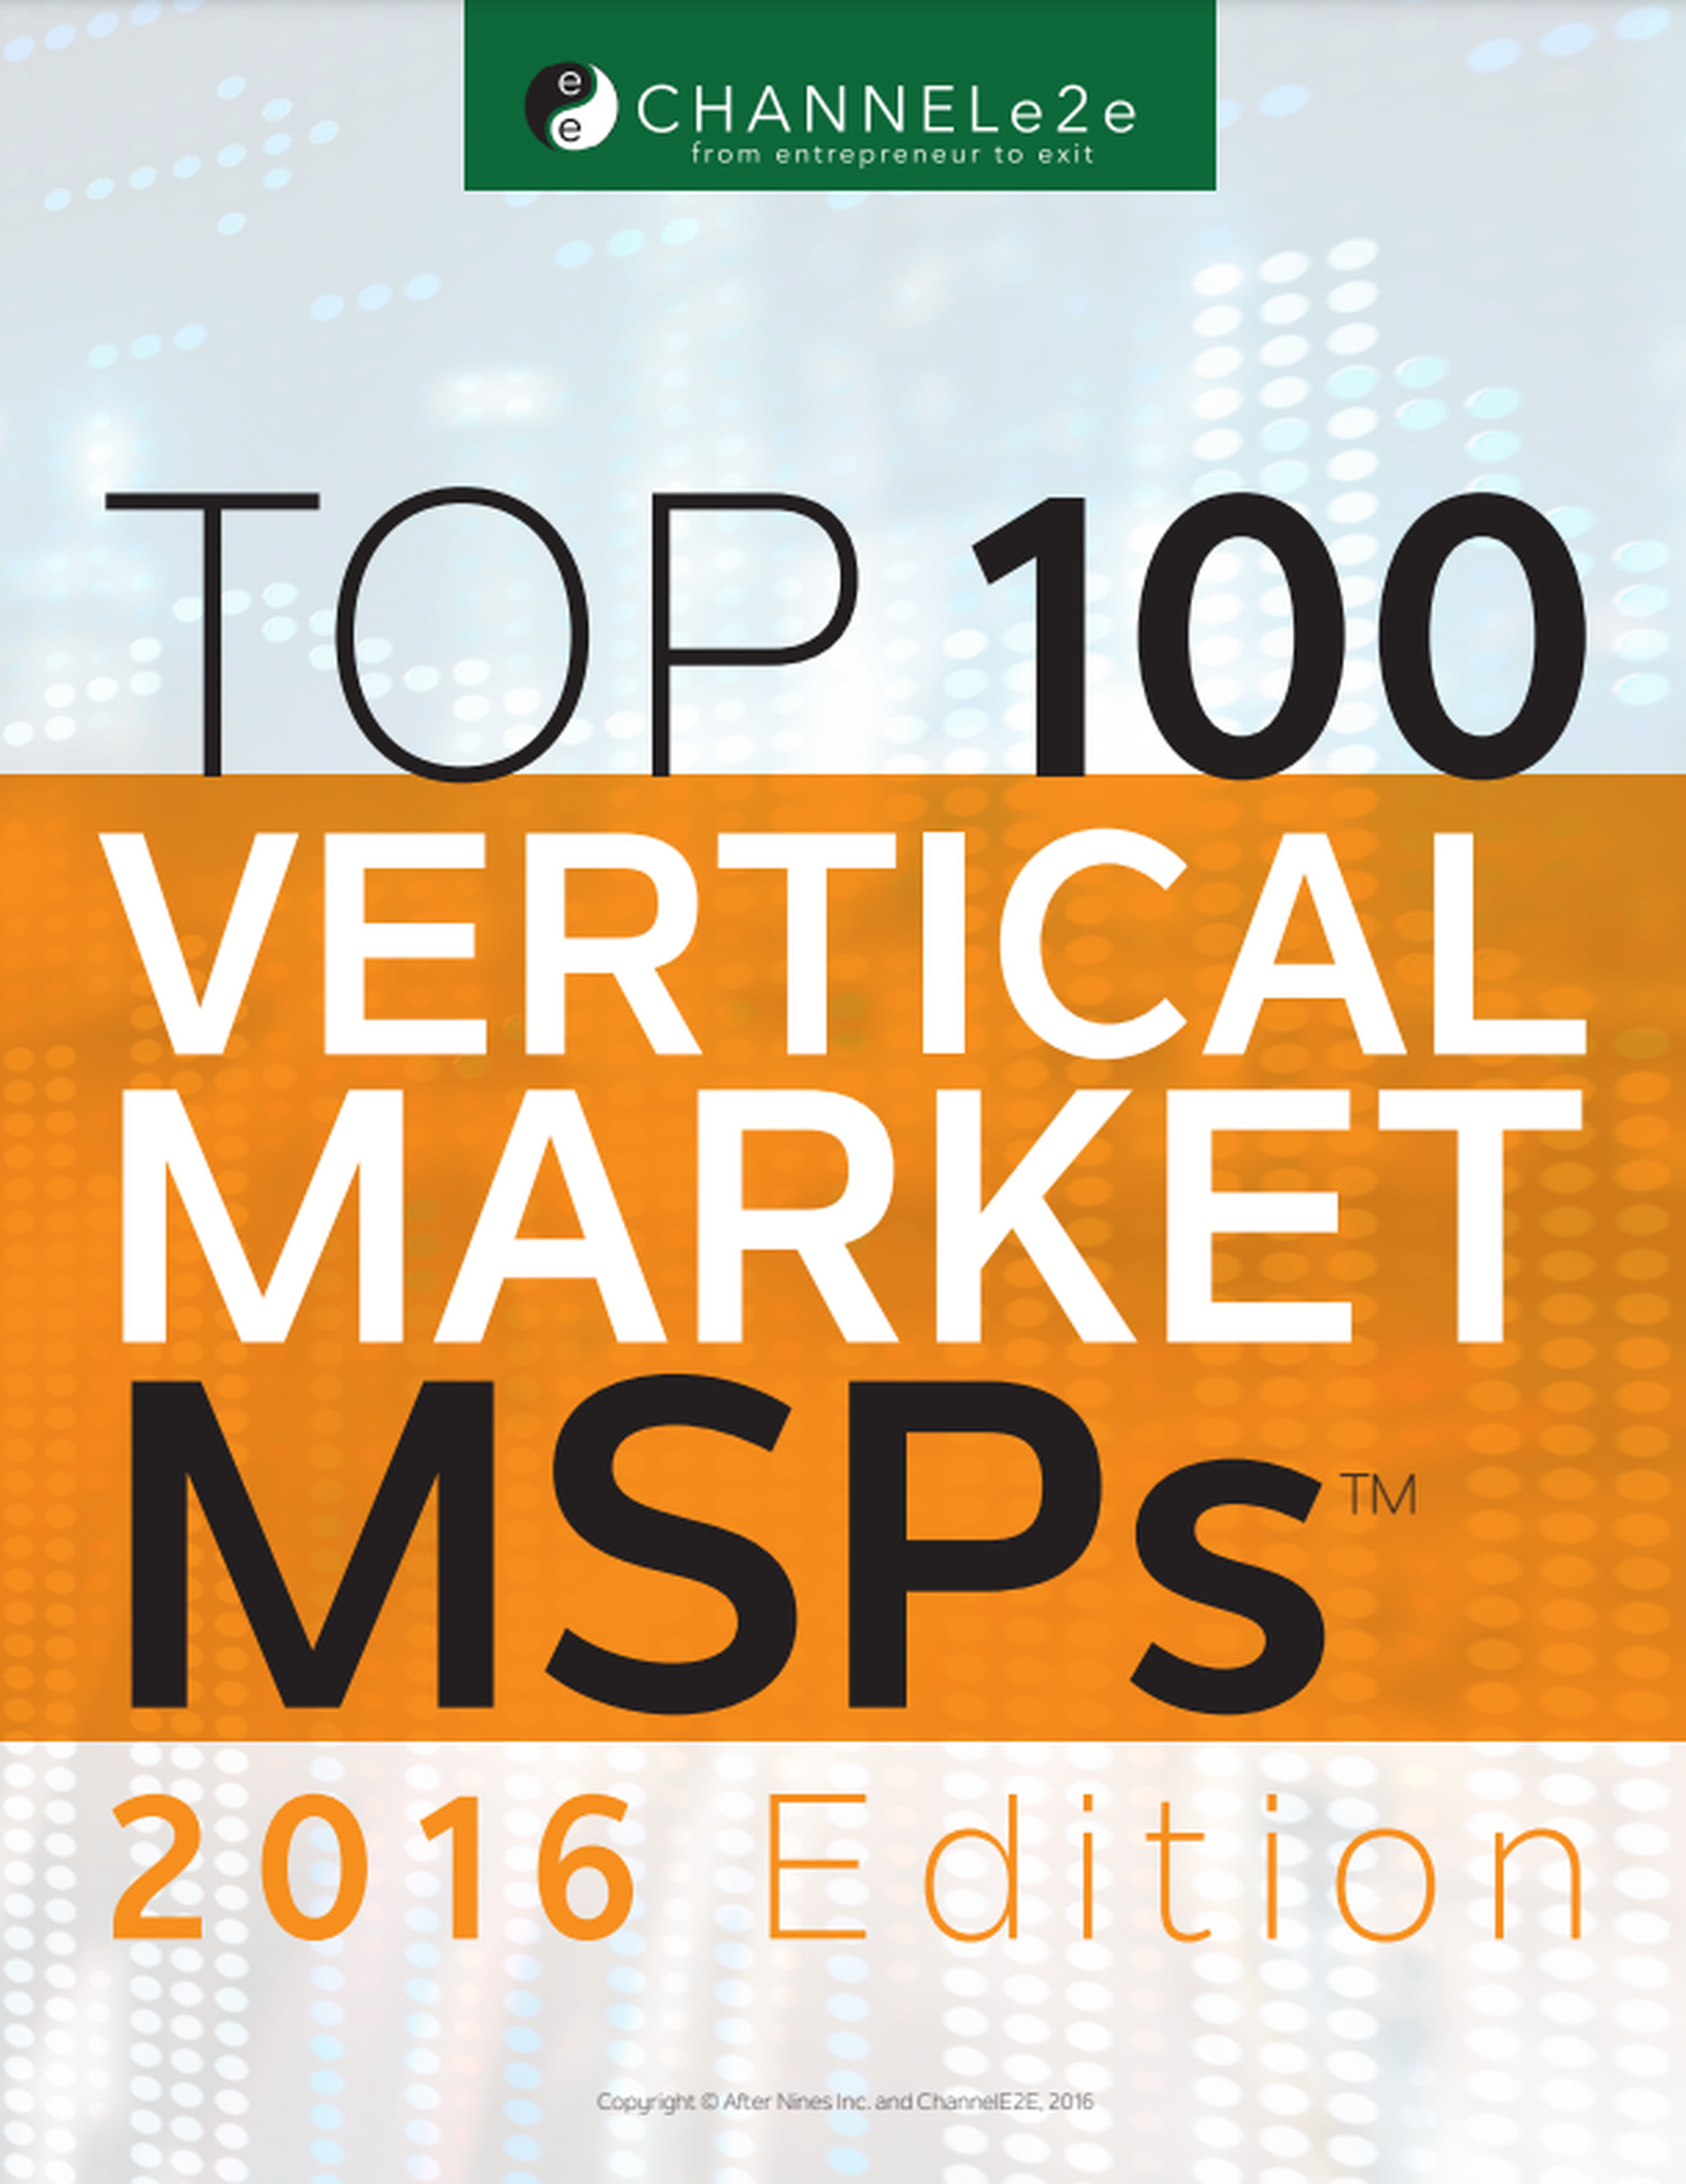 Top 100 Vertical Market MSPs 2016 Edition